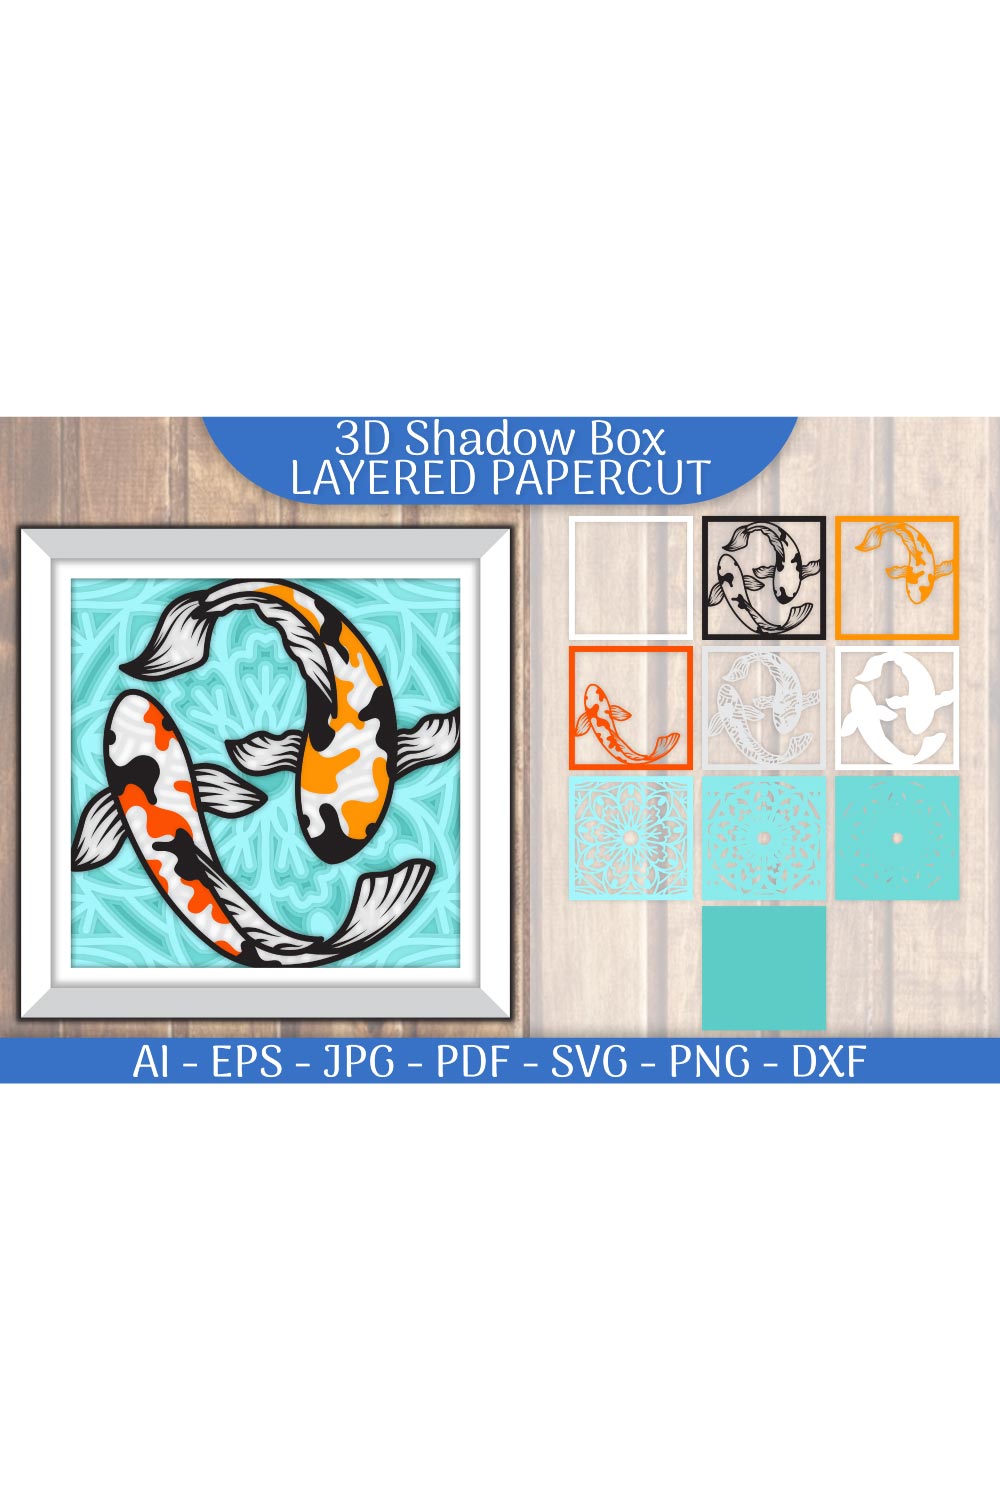 Koi Fish 3D Shadow Box Layered Papercut pinterest preview image.